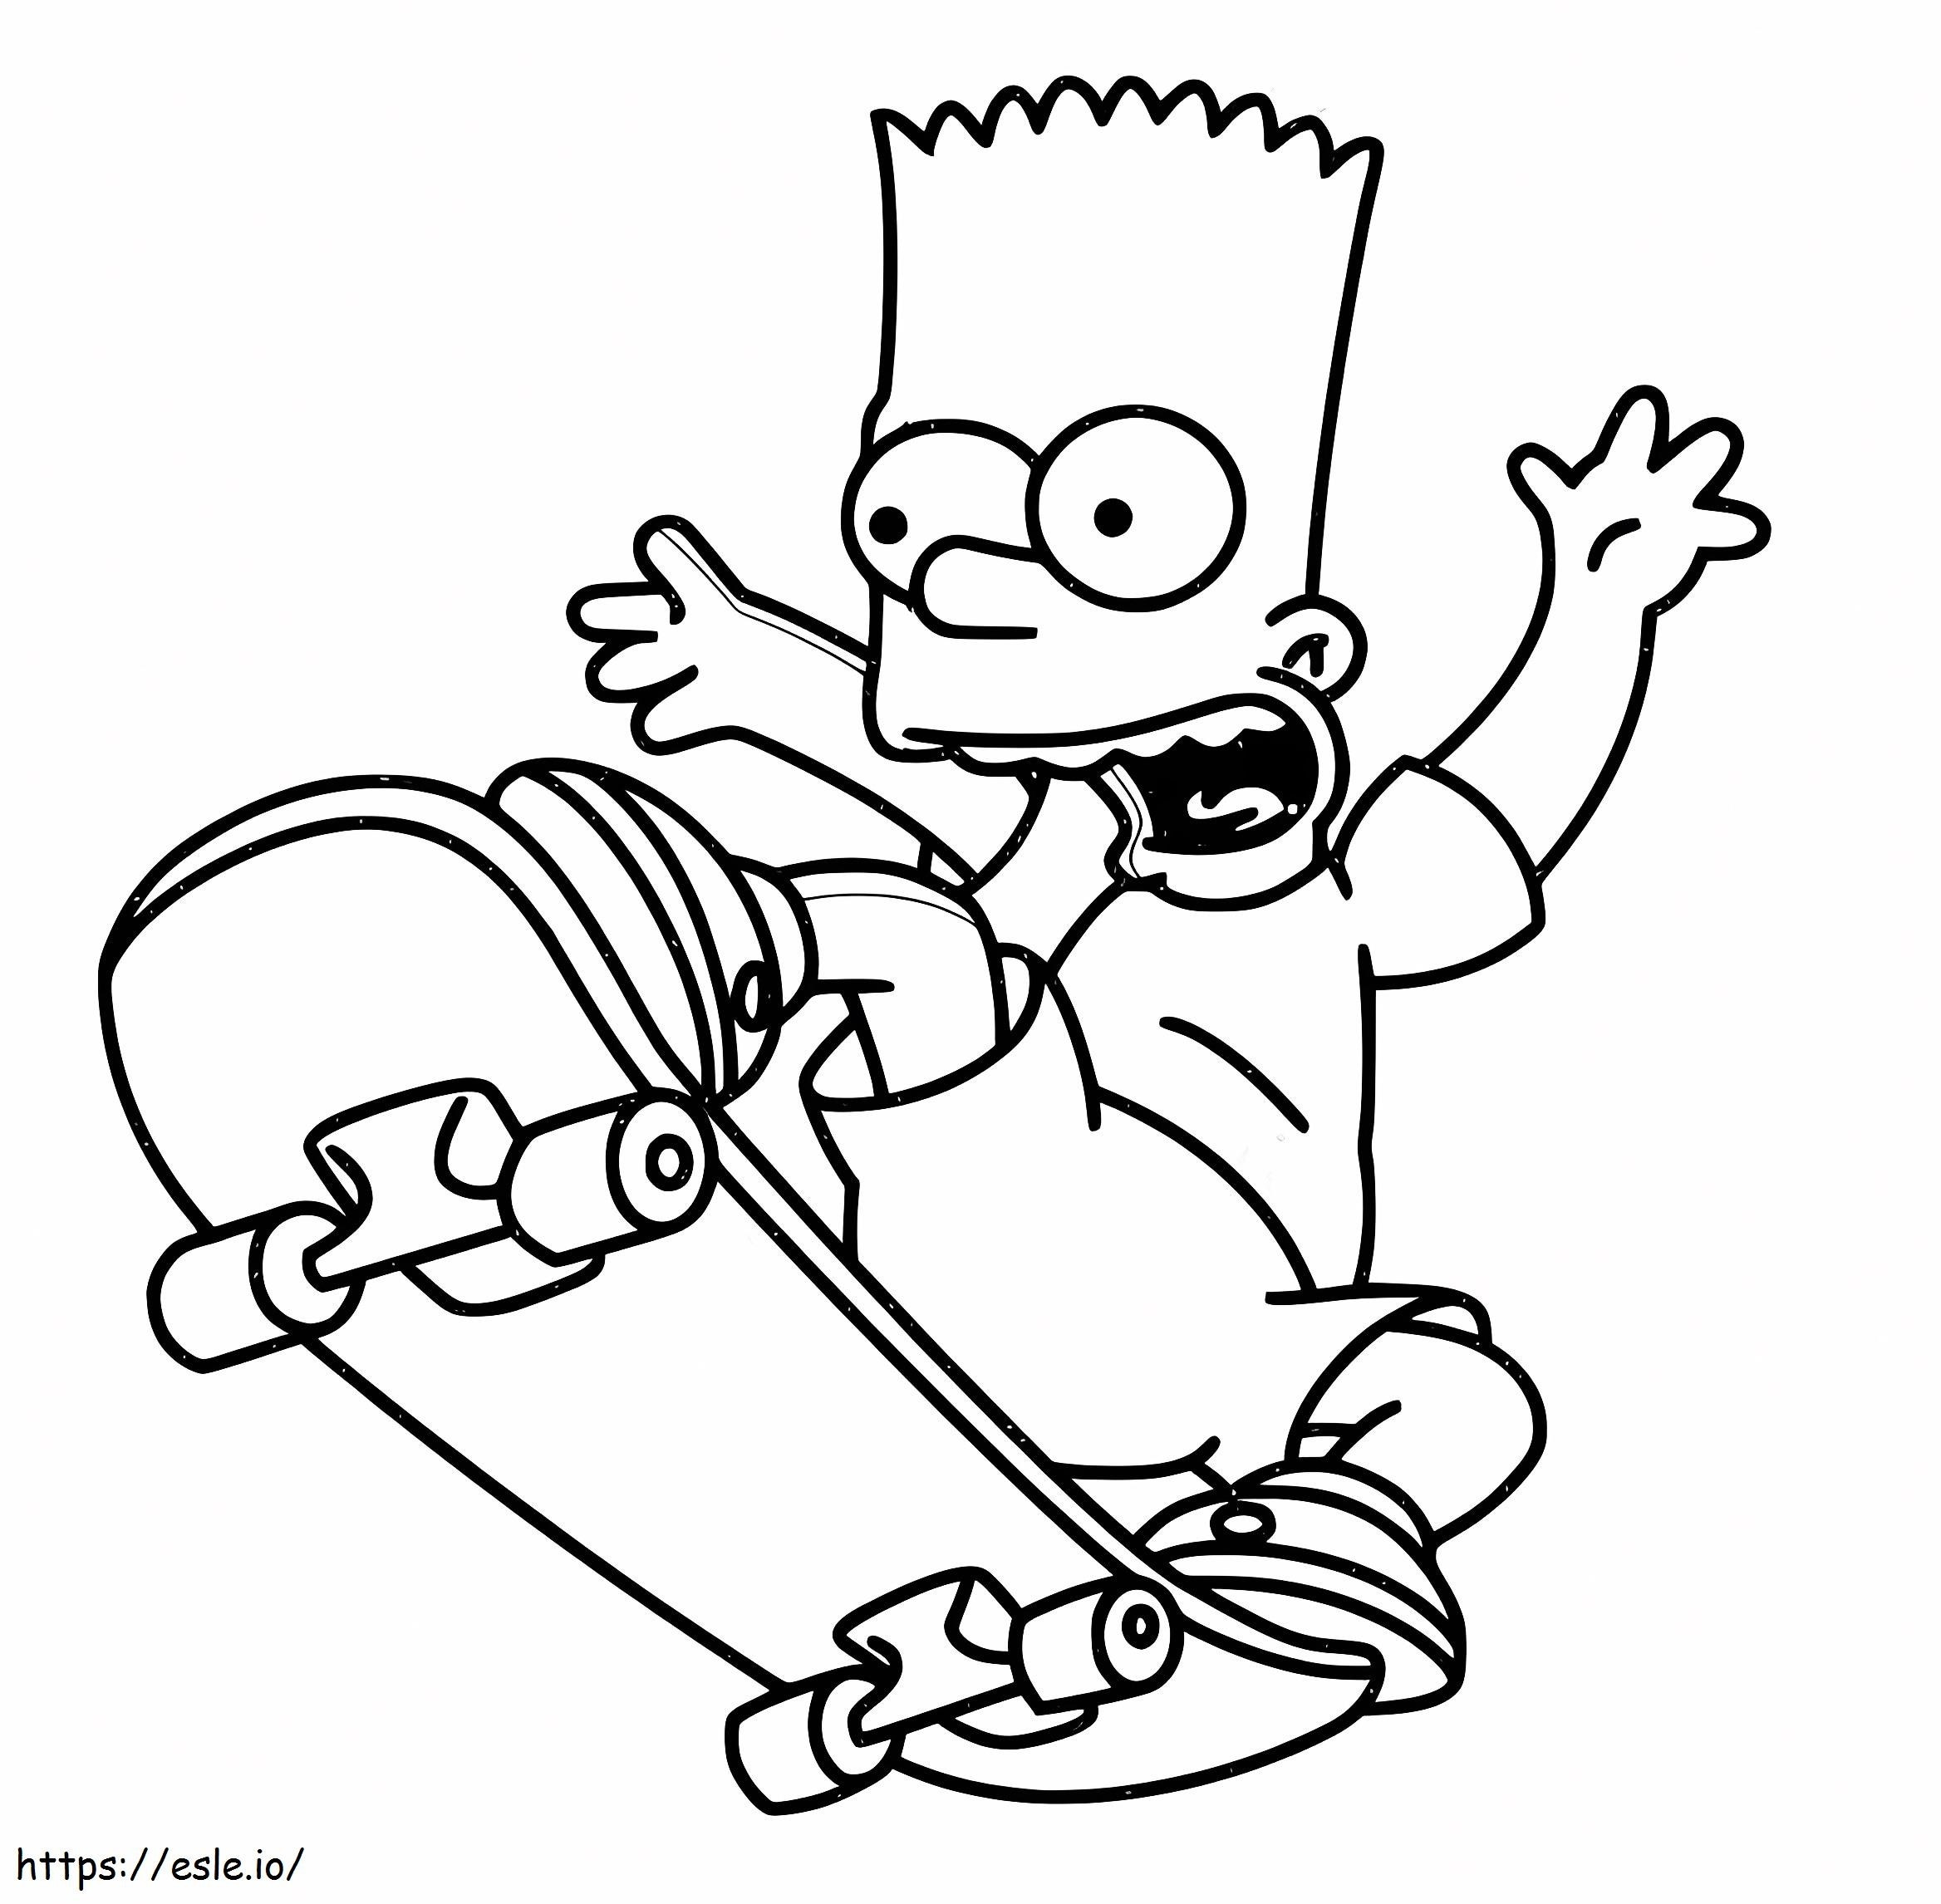 1532400701 Sepatu Skateboard Bart Simpson A4 Gambar Mewarnai